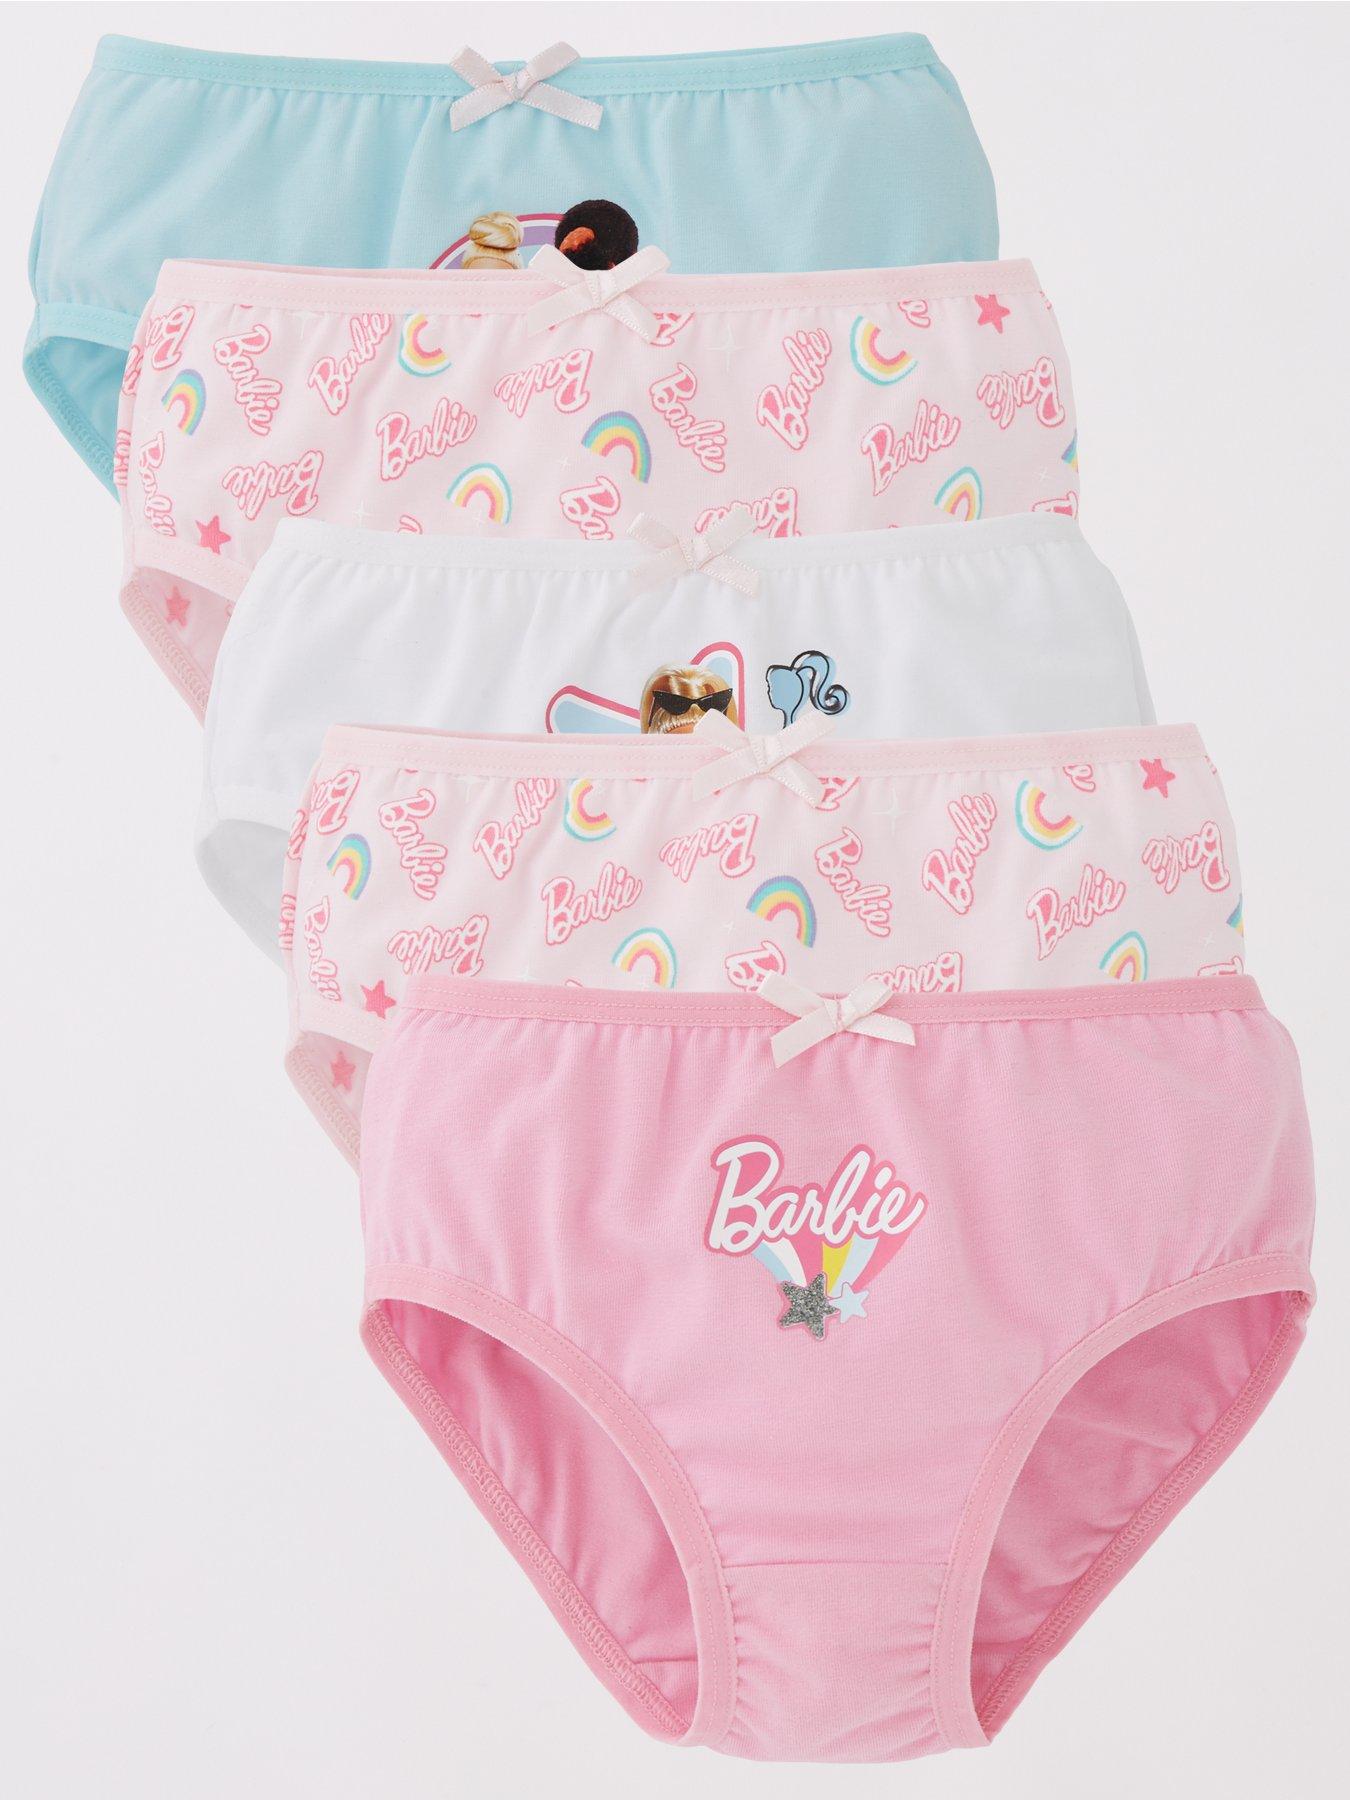 Girls Knickers Baby Underwear Toddler Kids Briefs Children Panties (Pack of  5)